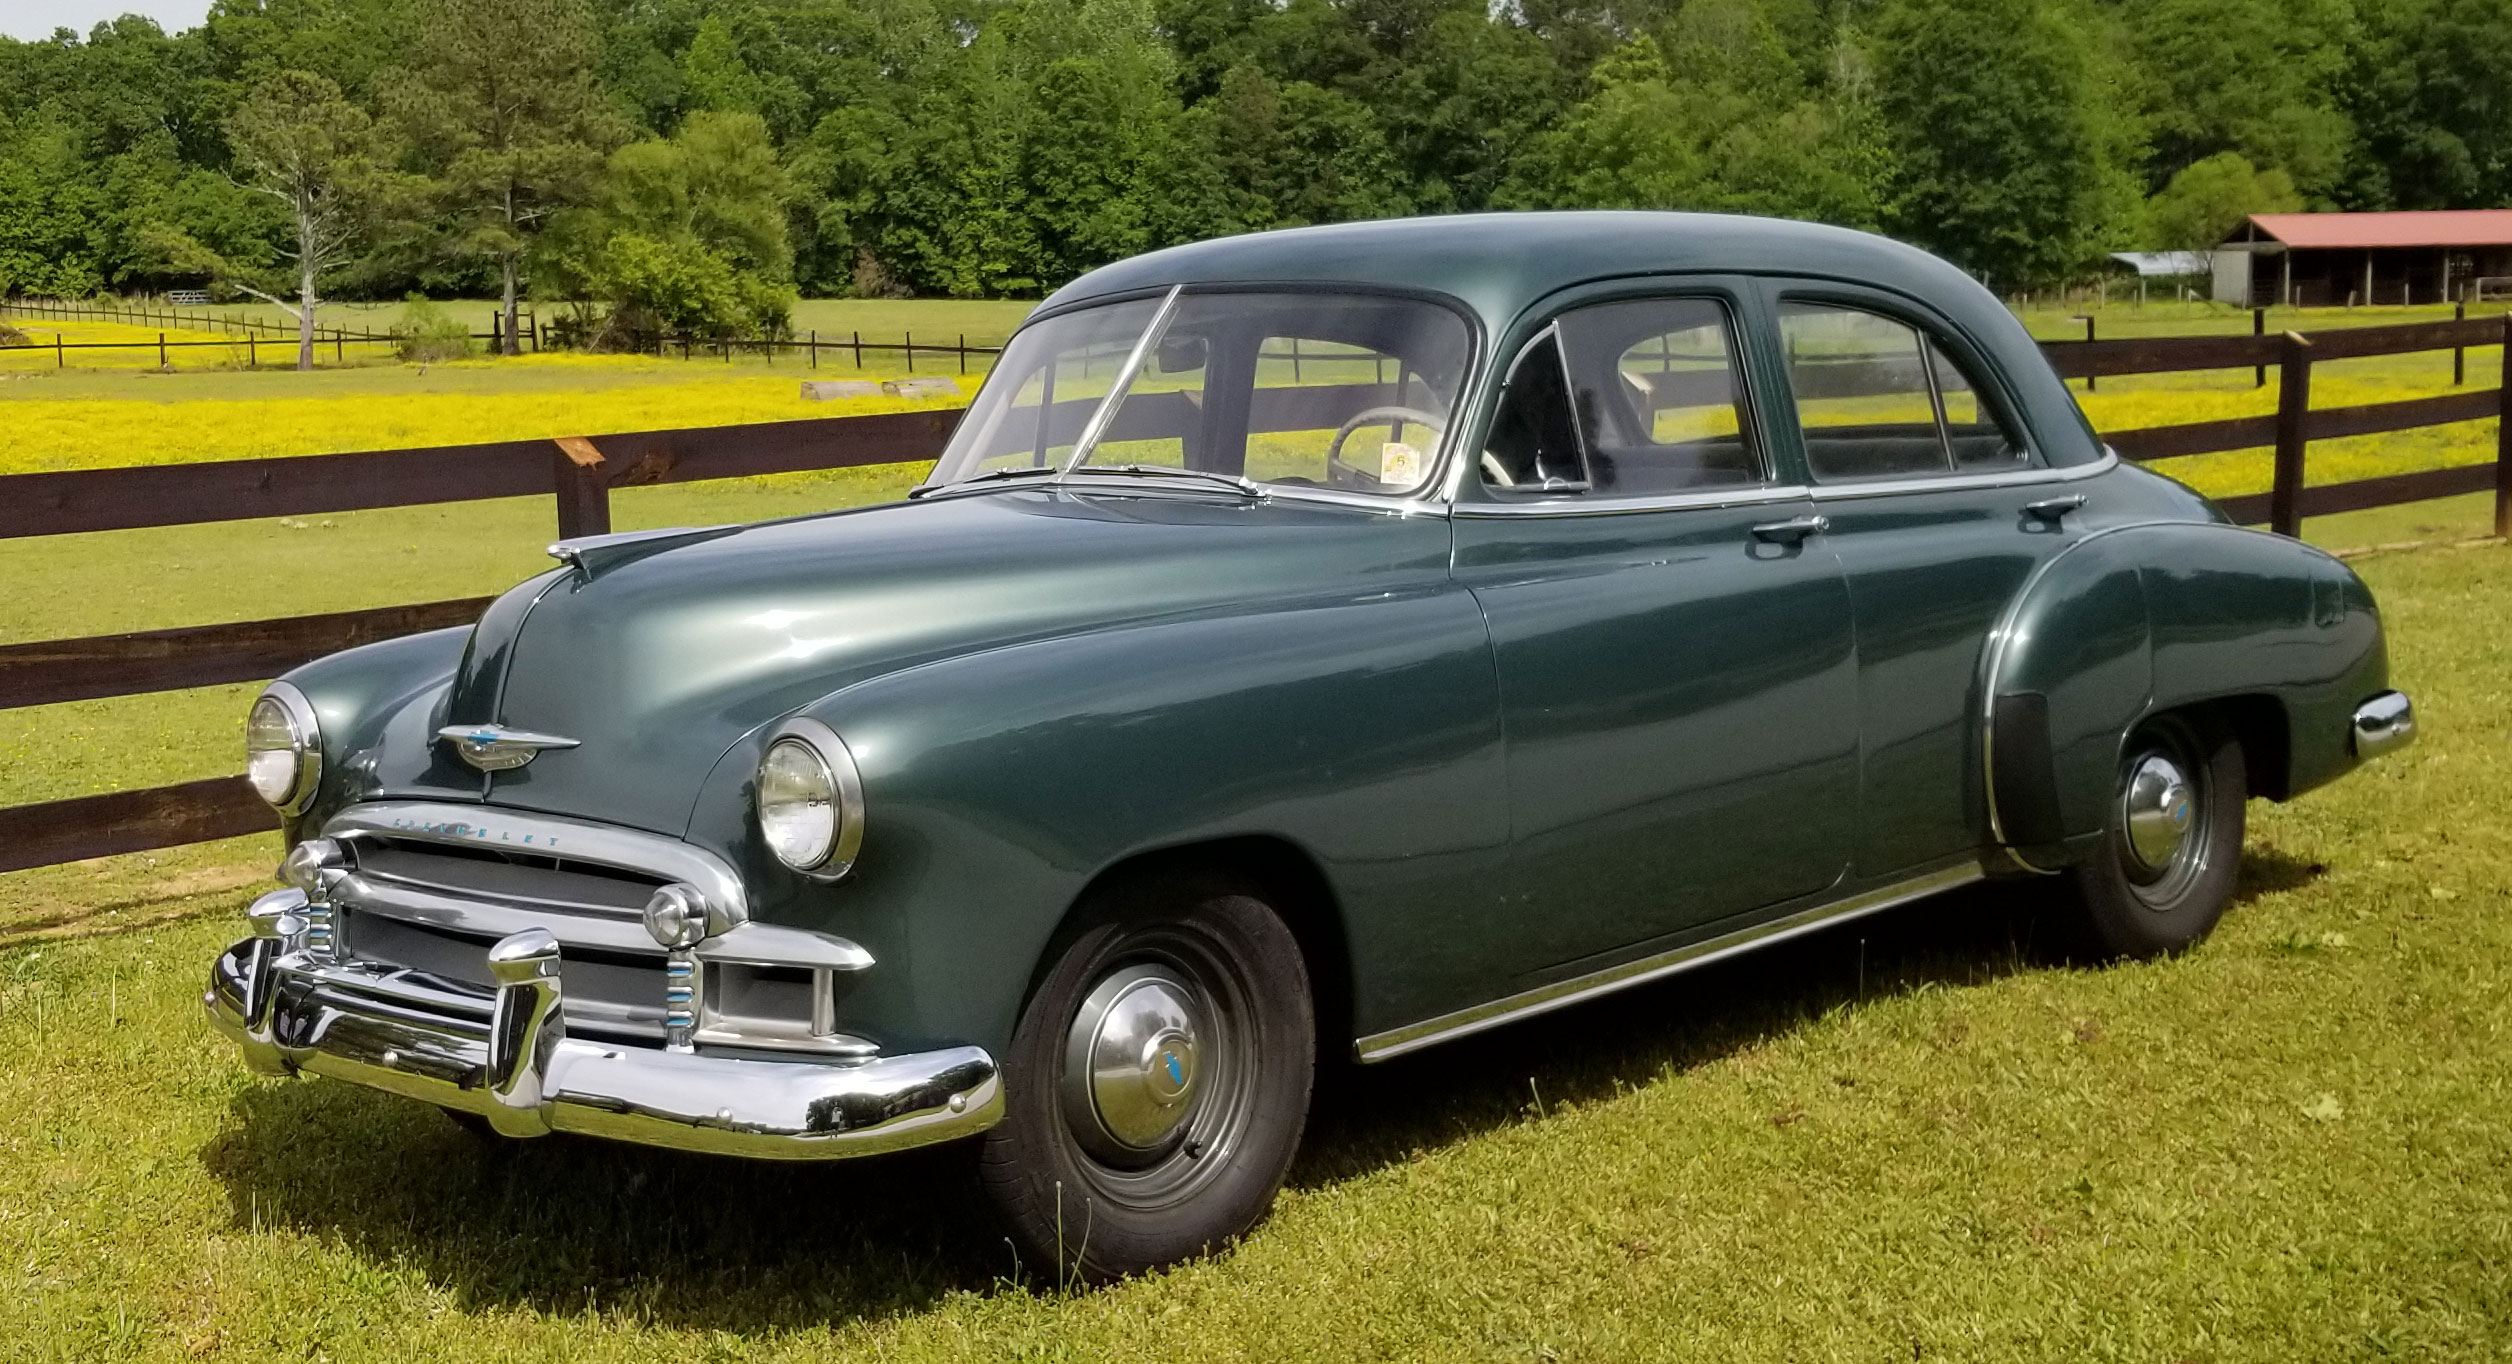 Bill's 1950 Chevrolet Styleline